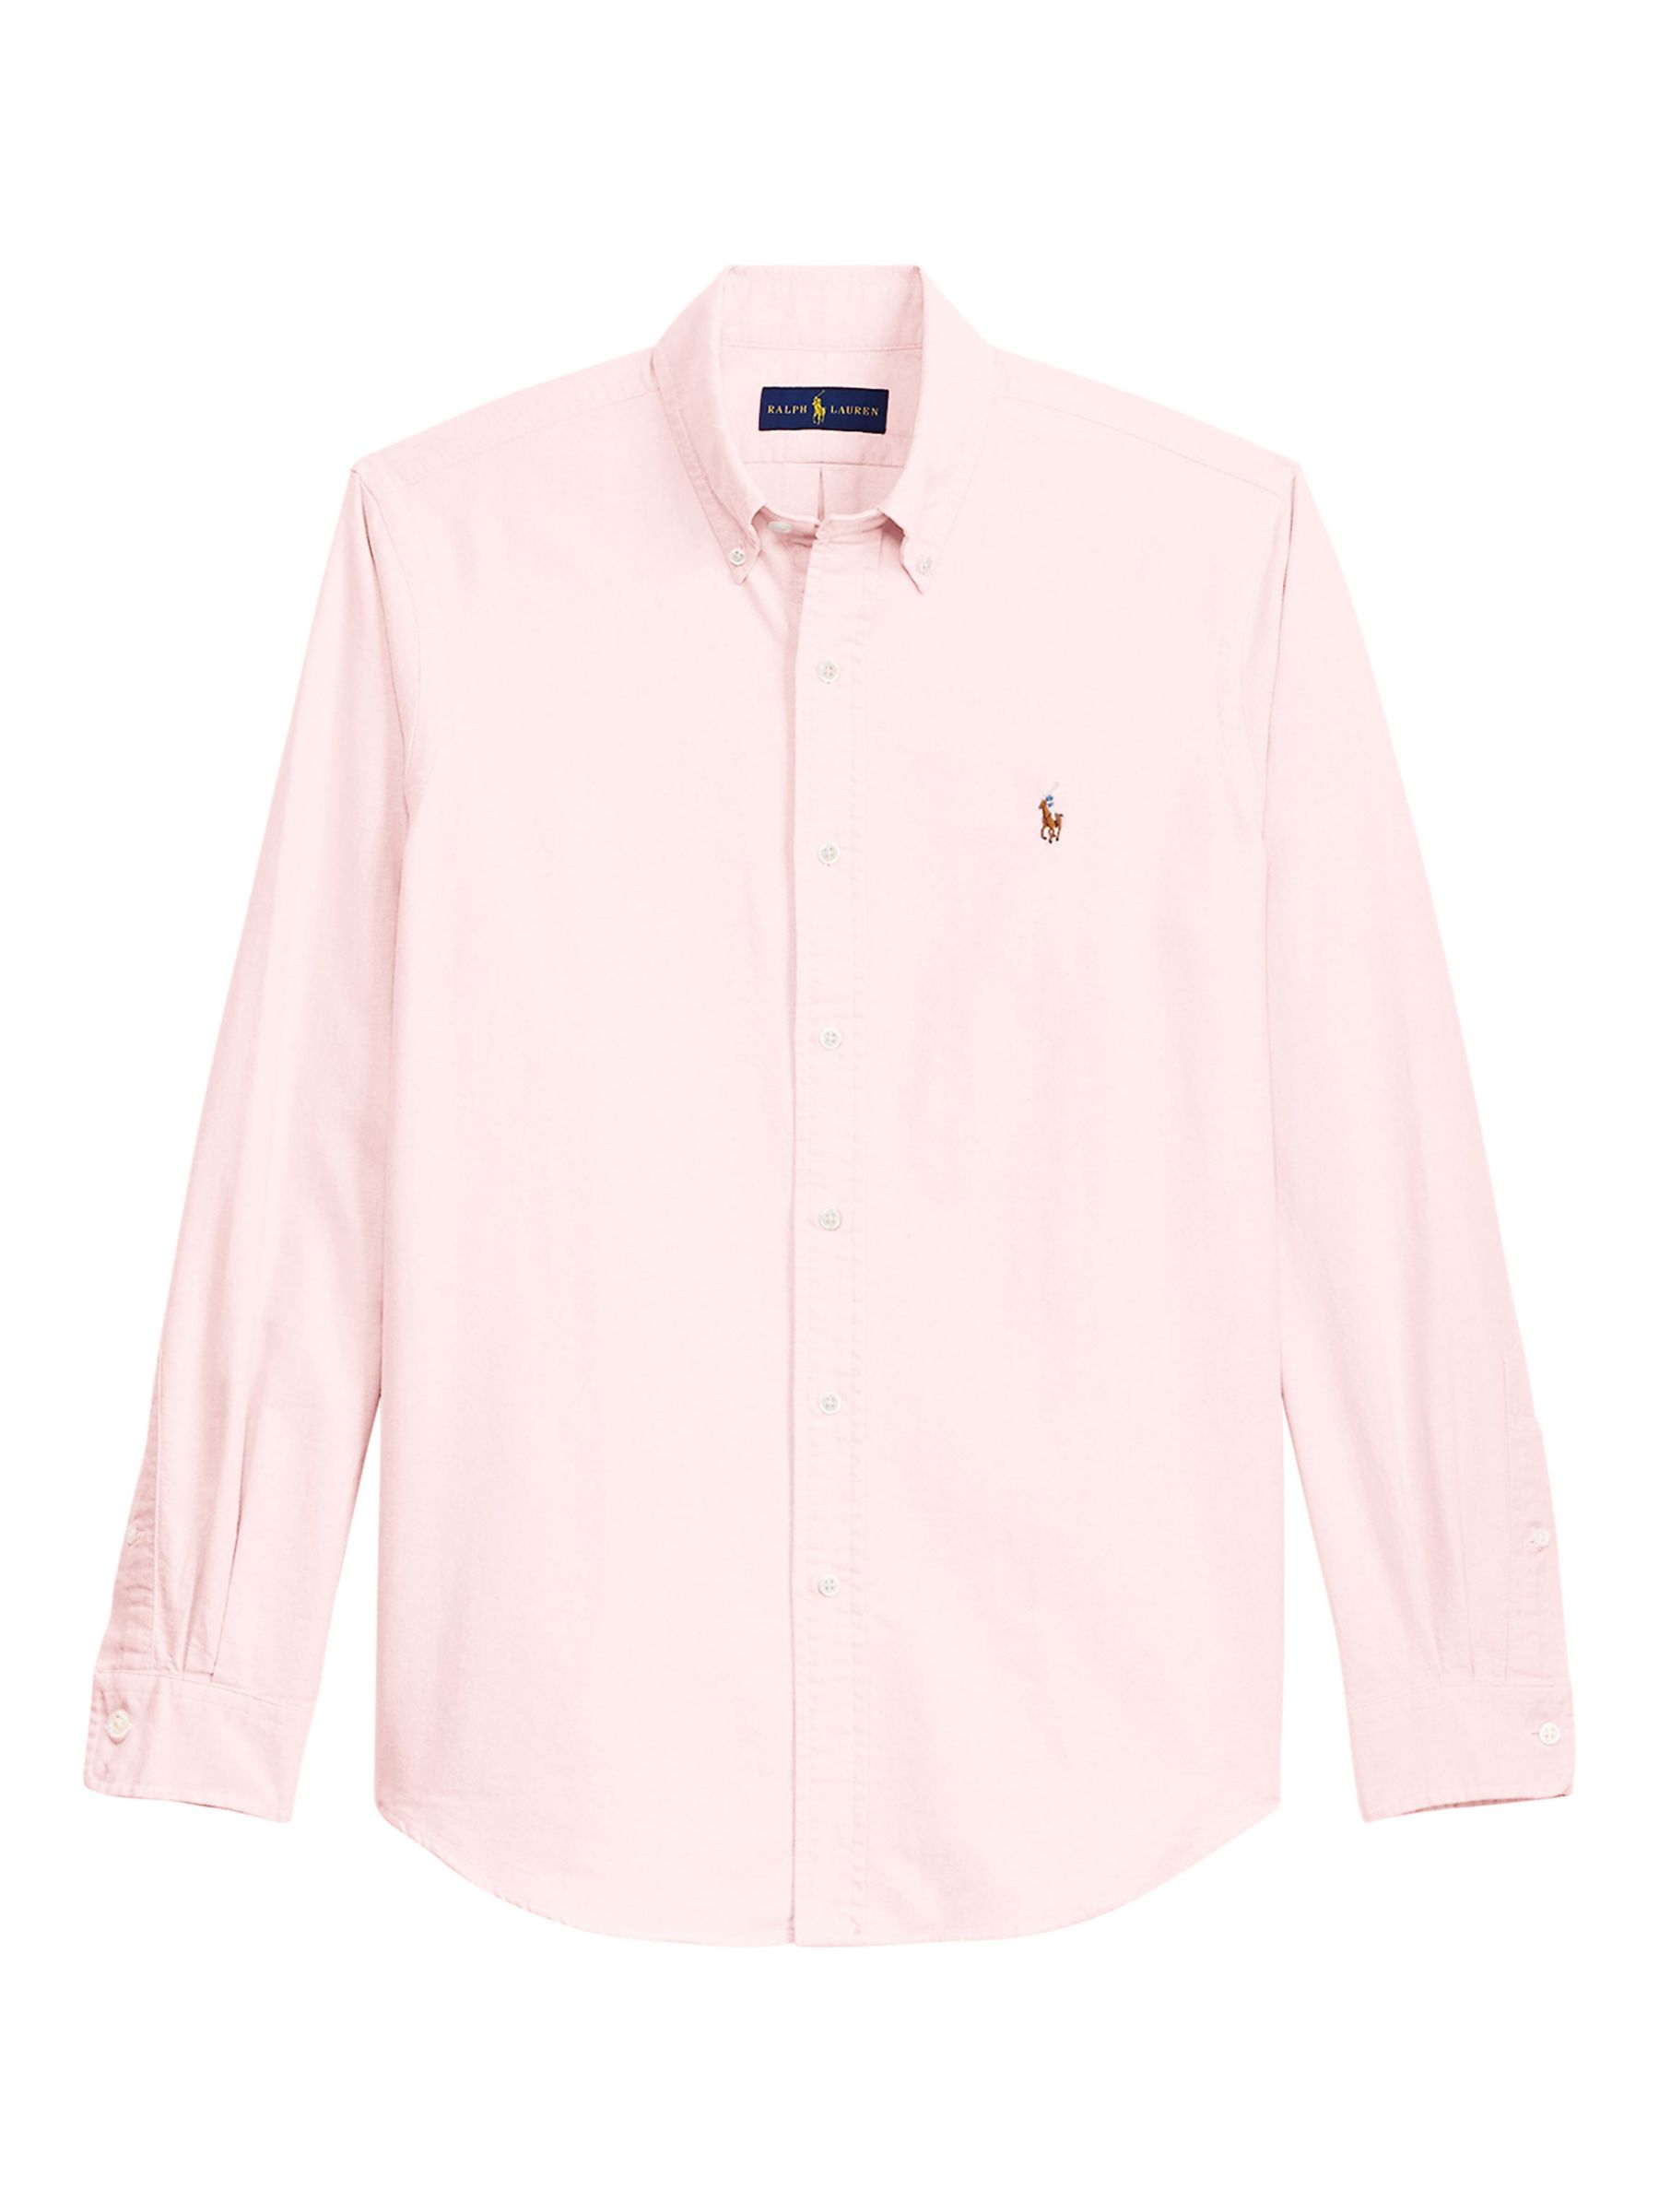 Polo Ralph Lauren Custom Fit Oxford Shirt, Pink at John Lewis & Partners